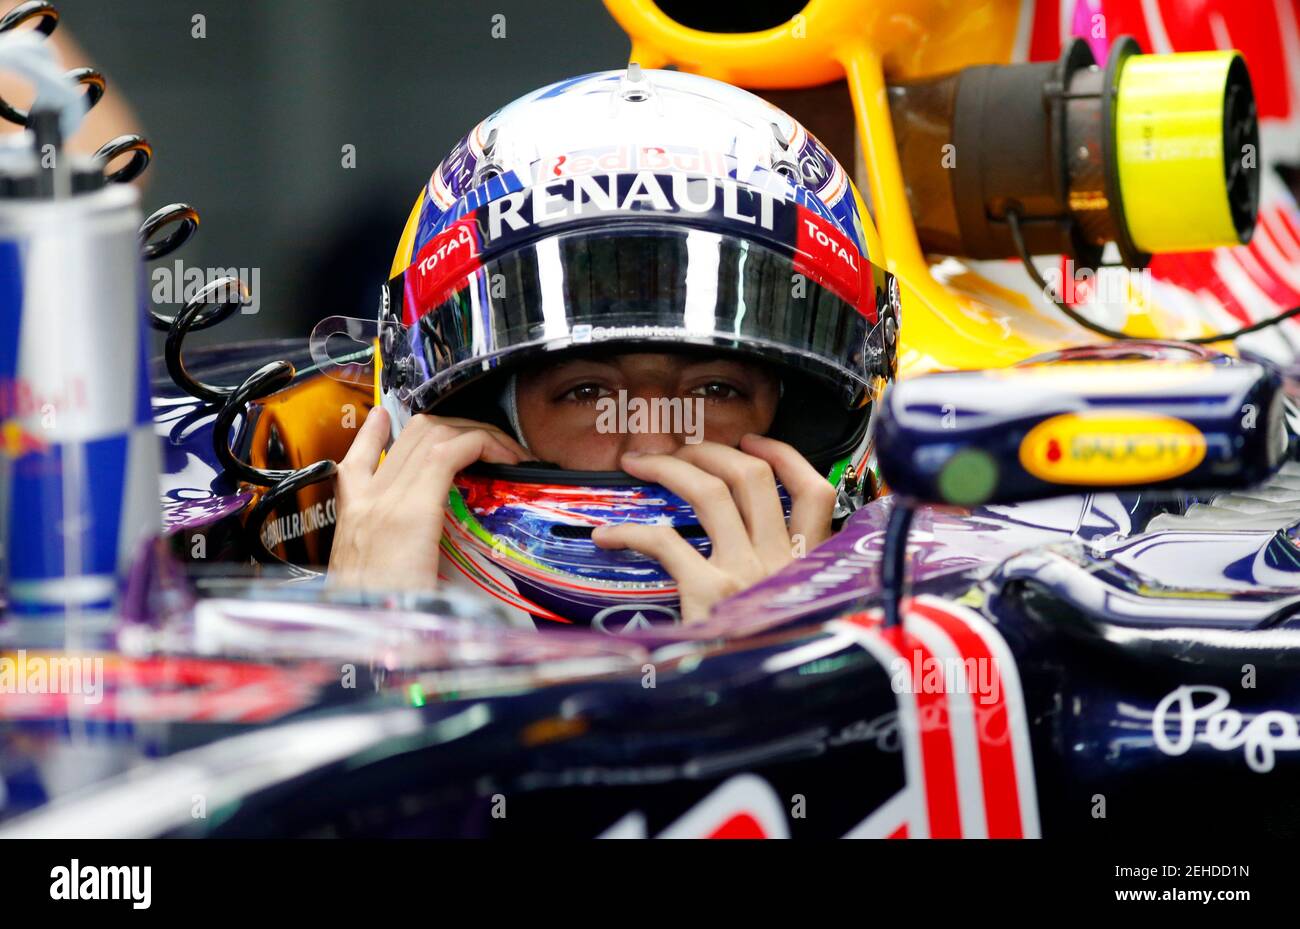 Formula One - F1 - Malaysian Grand Prix 2015 - Sepang International Circuit, Kuala Lumpur, Malaysia - 27/3/15  Red Bull's Daniel Ricciardo adjusts his helmet in the pit during practice  Reuters / Olivia Harris  Livepic Stock Photo